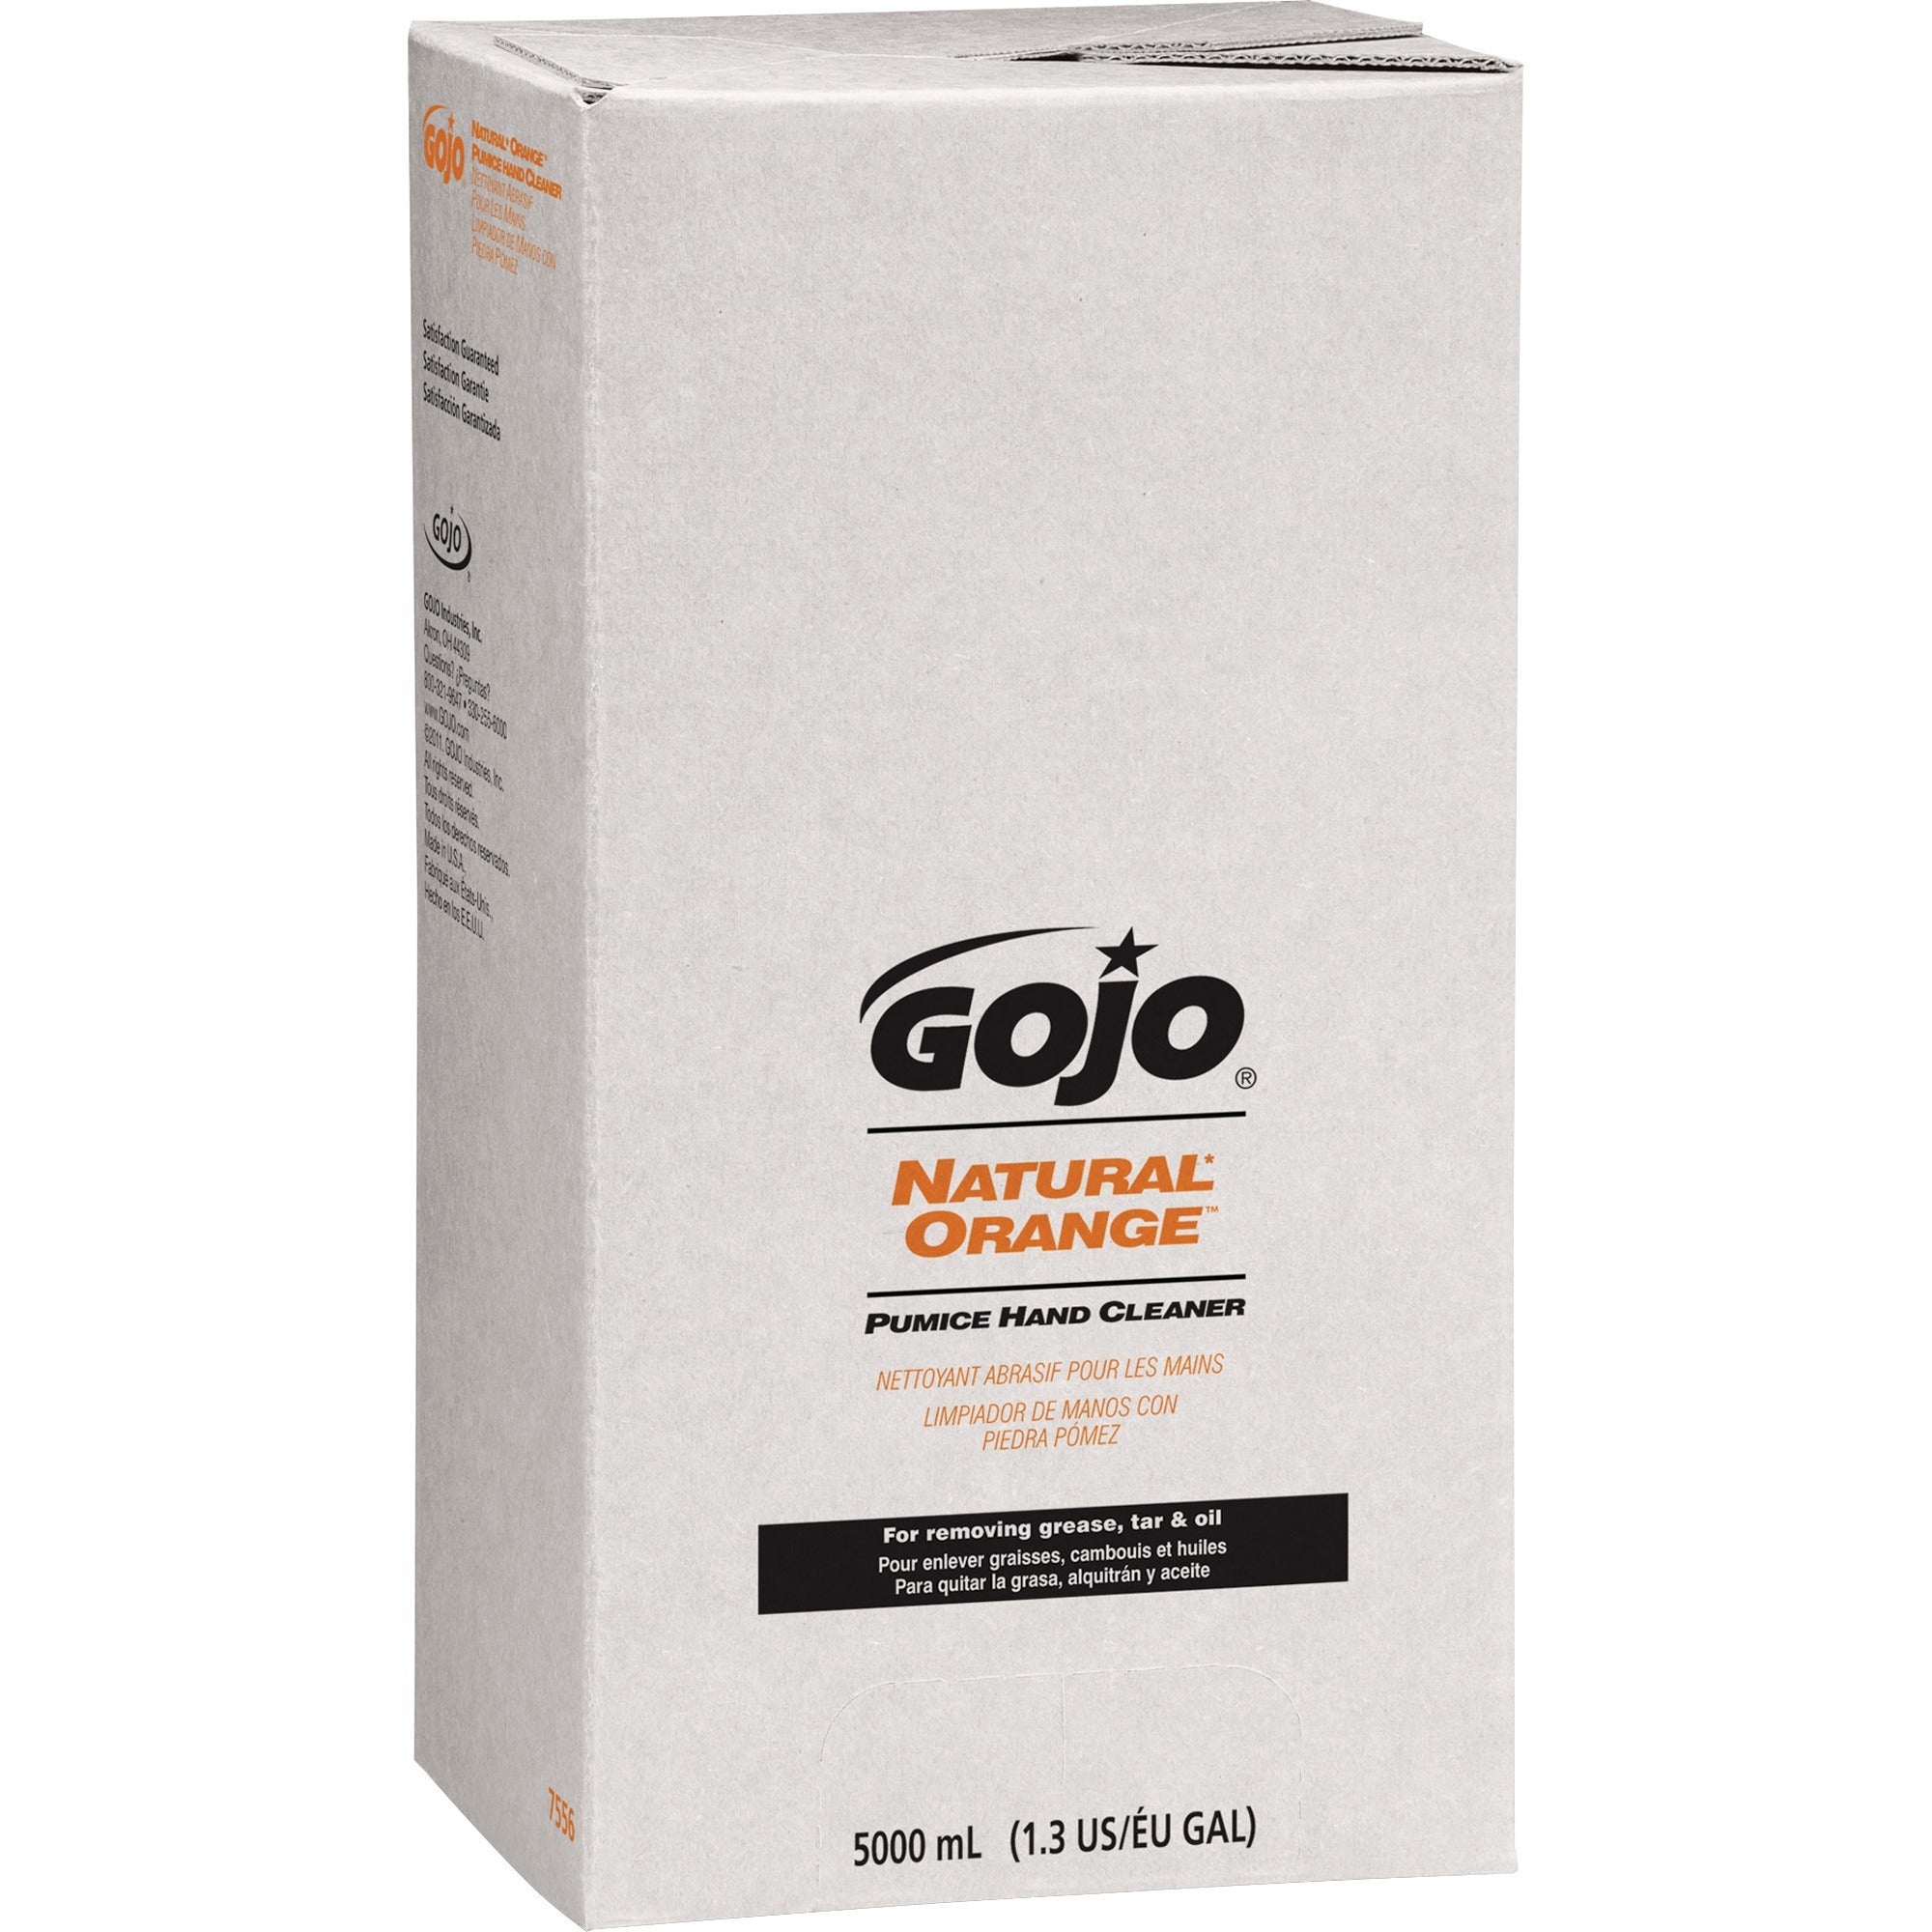 gojo-natural-orange-pumice-hand-cleaner-citrus-scentfor-13-gal-5-l-oil-remover-grease-remover-dirt-remover-soil-remover-hand-white-fast-acting-2-carton_goj755602ct - 2